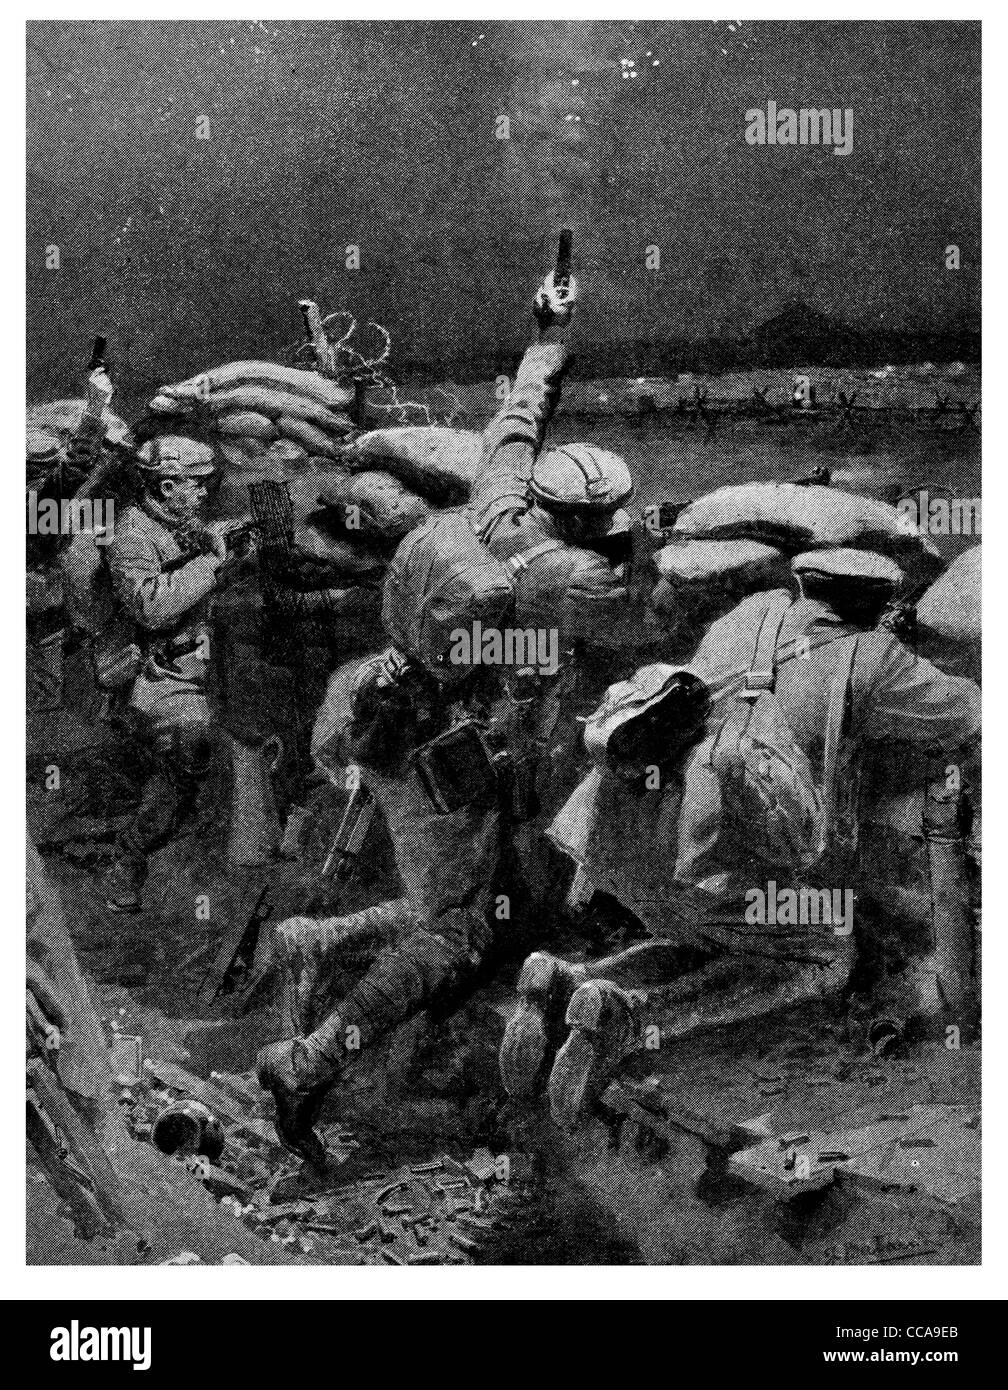 1916 night attack ruse star pistol night flare decoy British trench sandbag gun front line barbed wire no mans land surprise Stock Photo